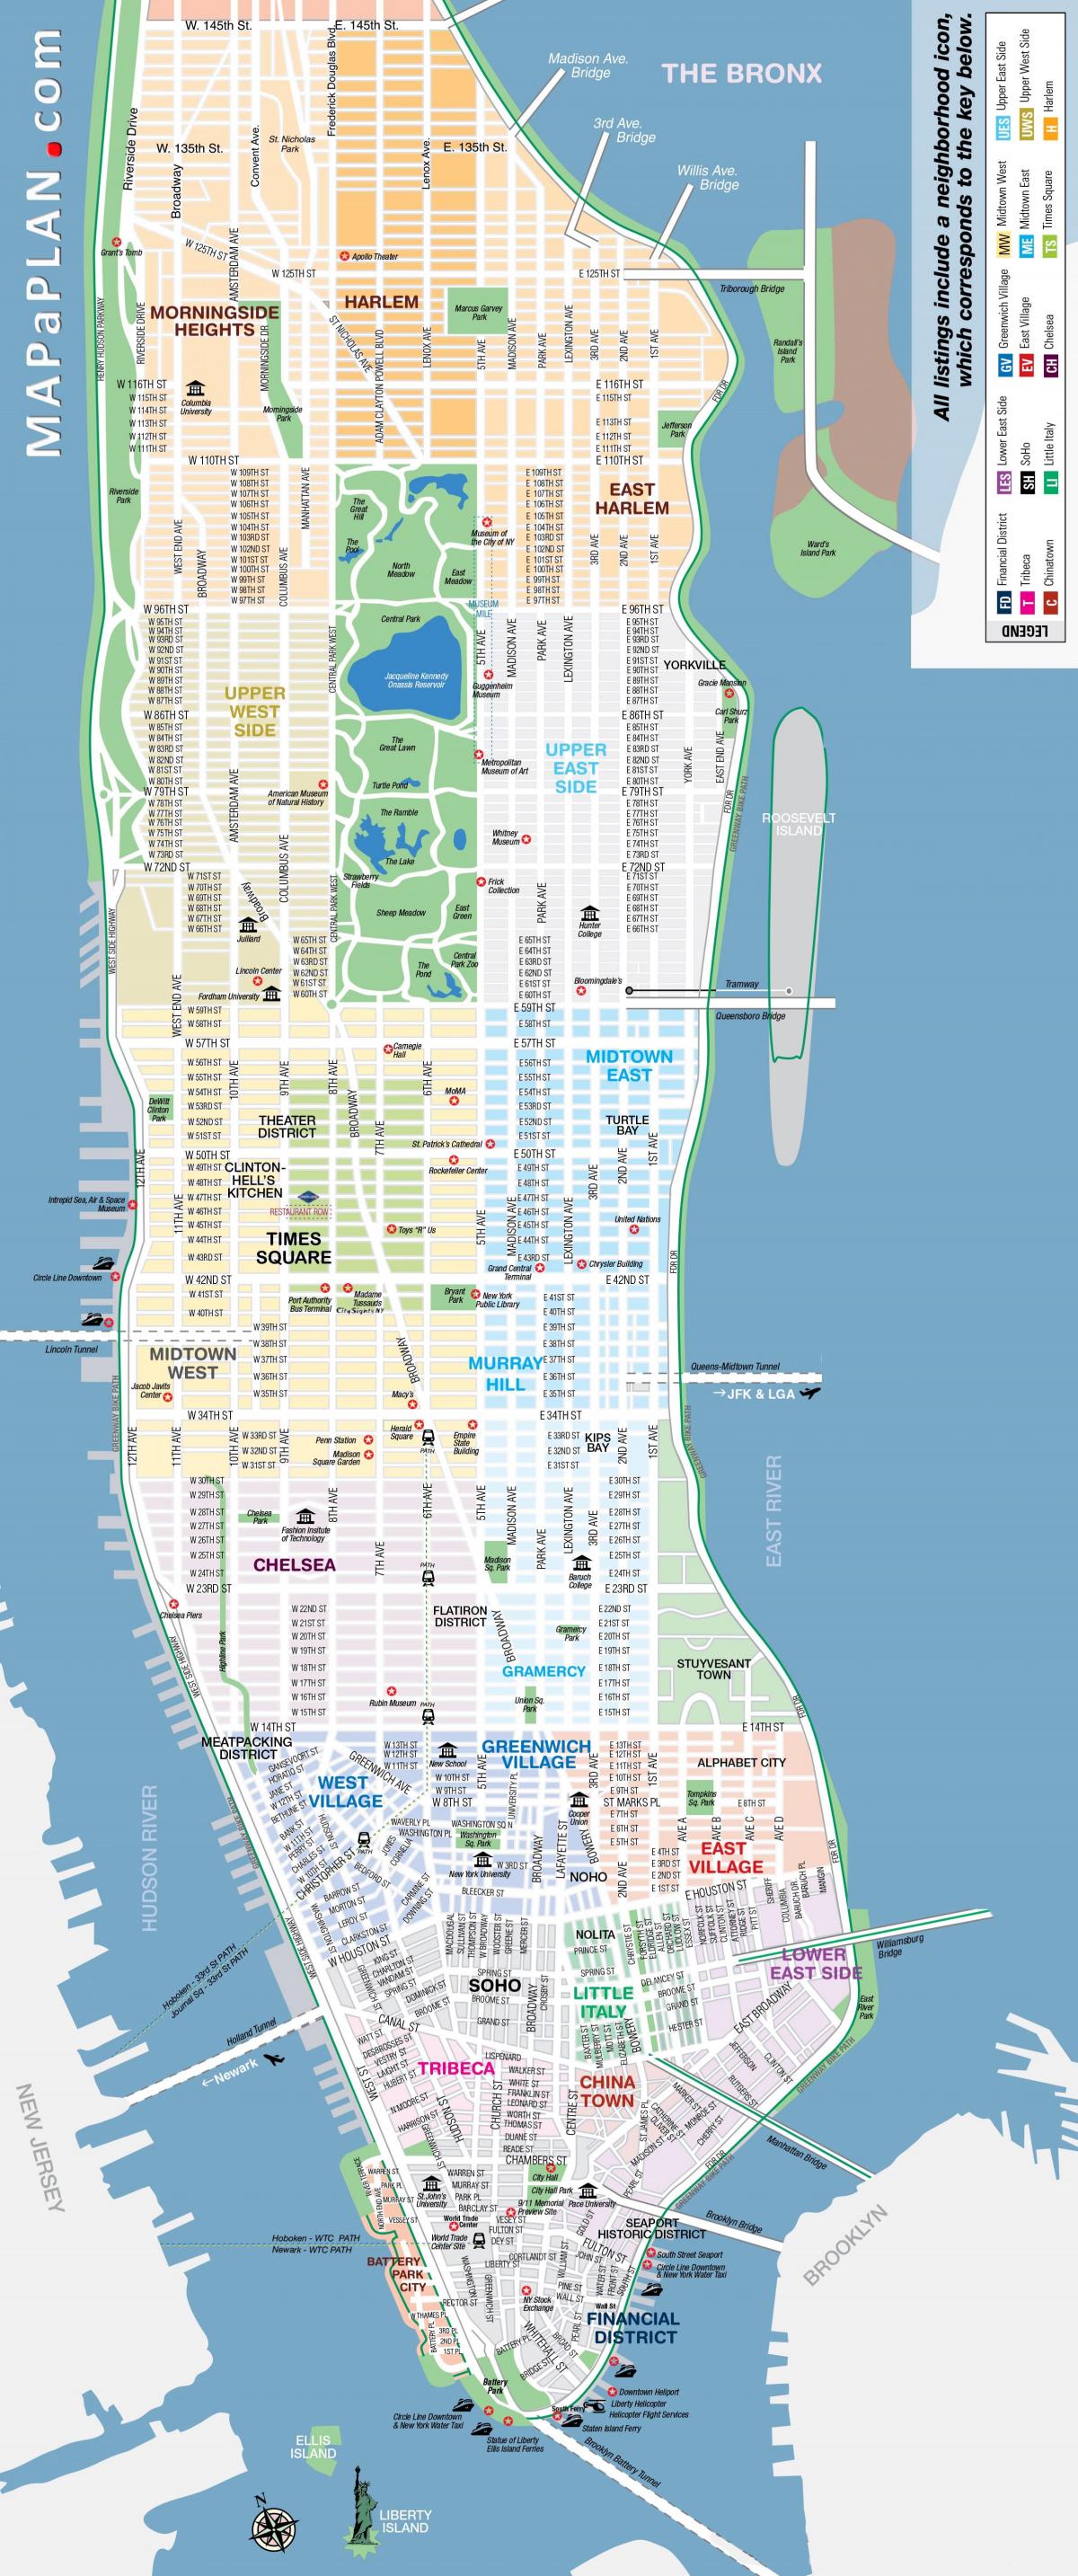 Printable map of Manhattan Free printable map of Manhattan NYC (New